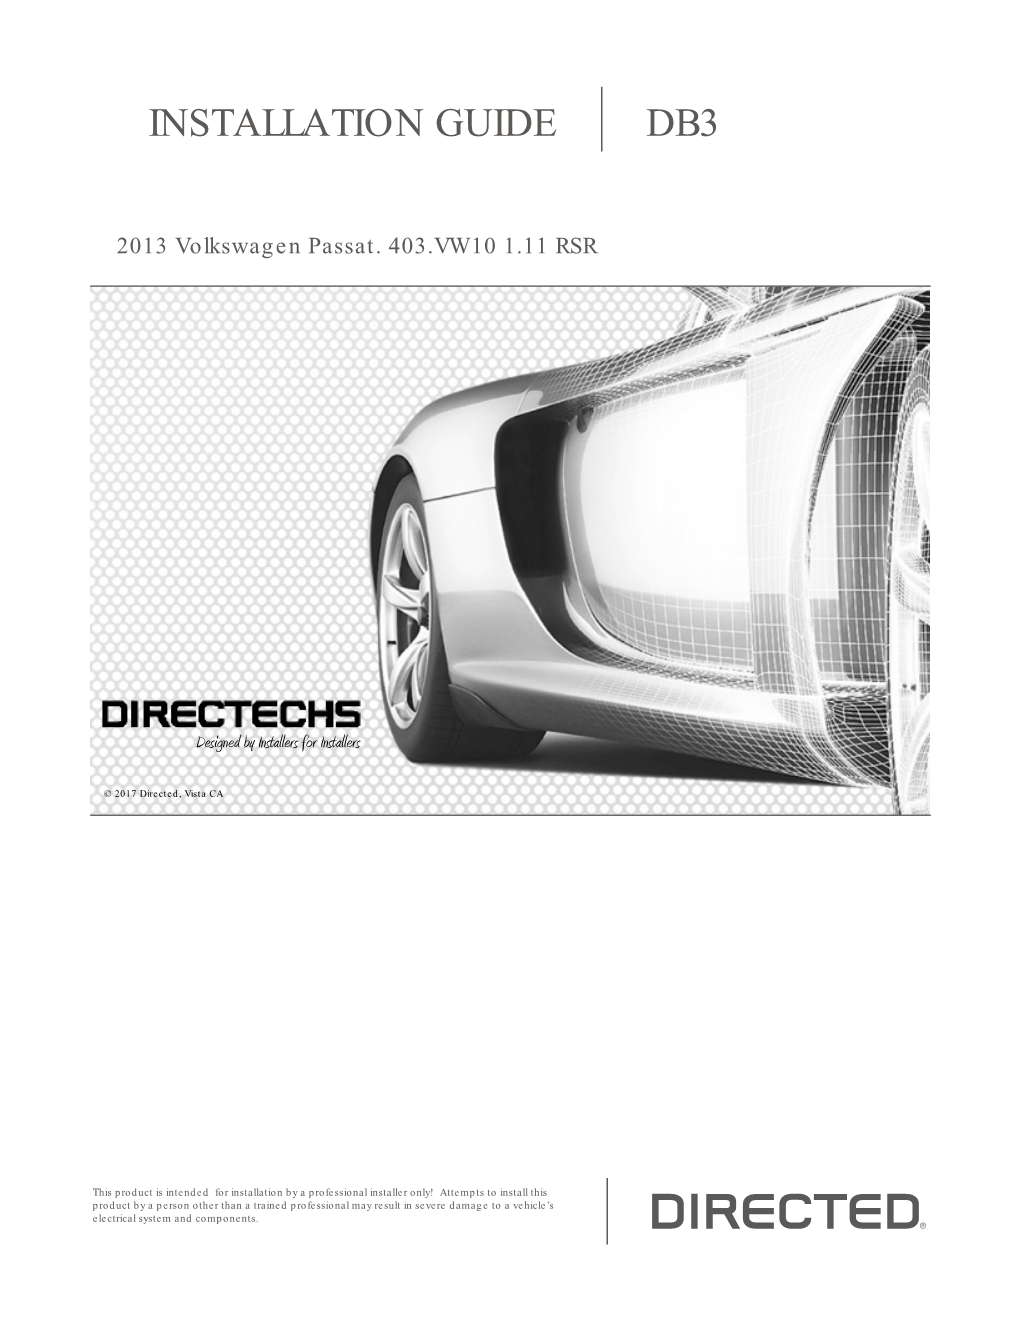 Installation Guide. 2013 Volkswagen Passat. 403.VW10 1.11